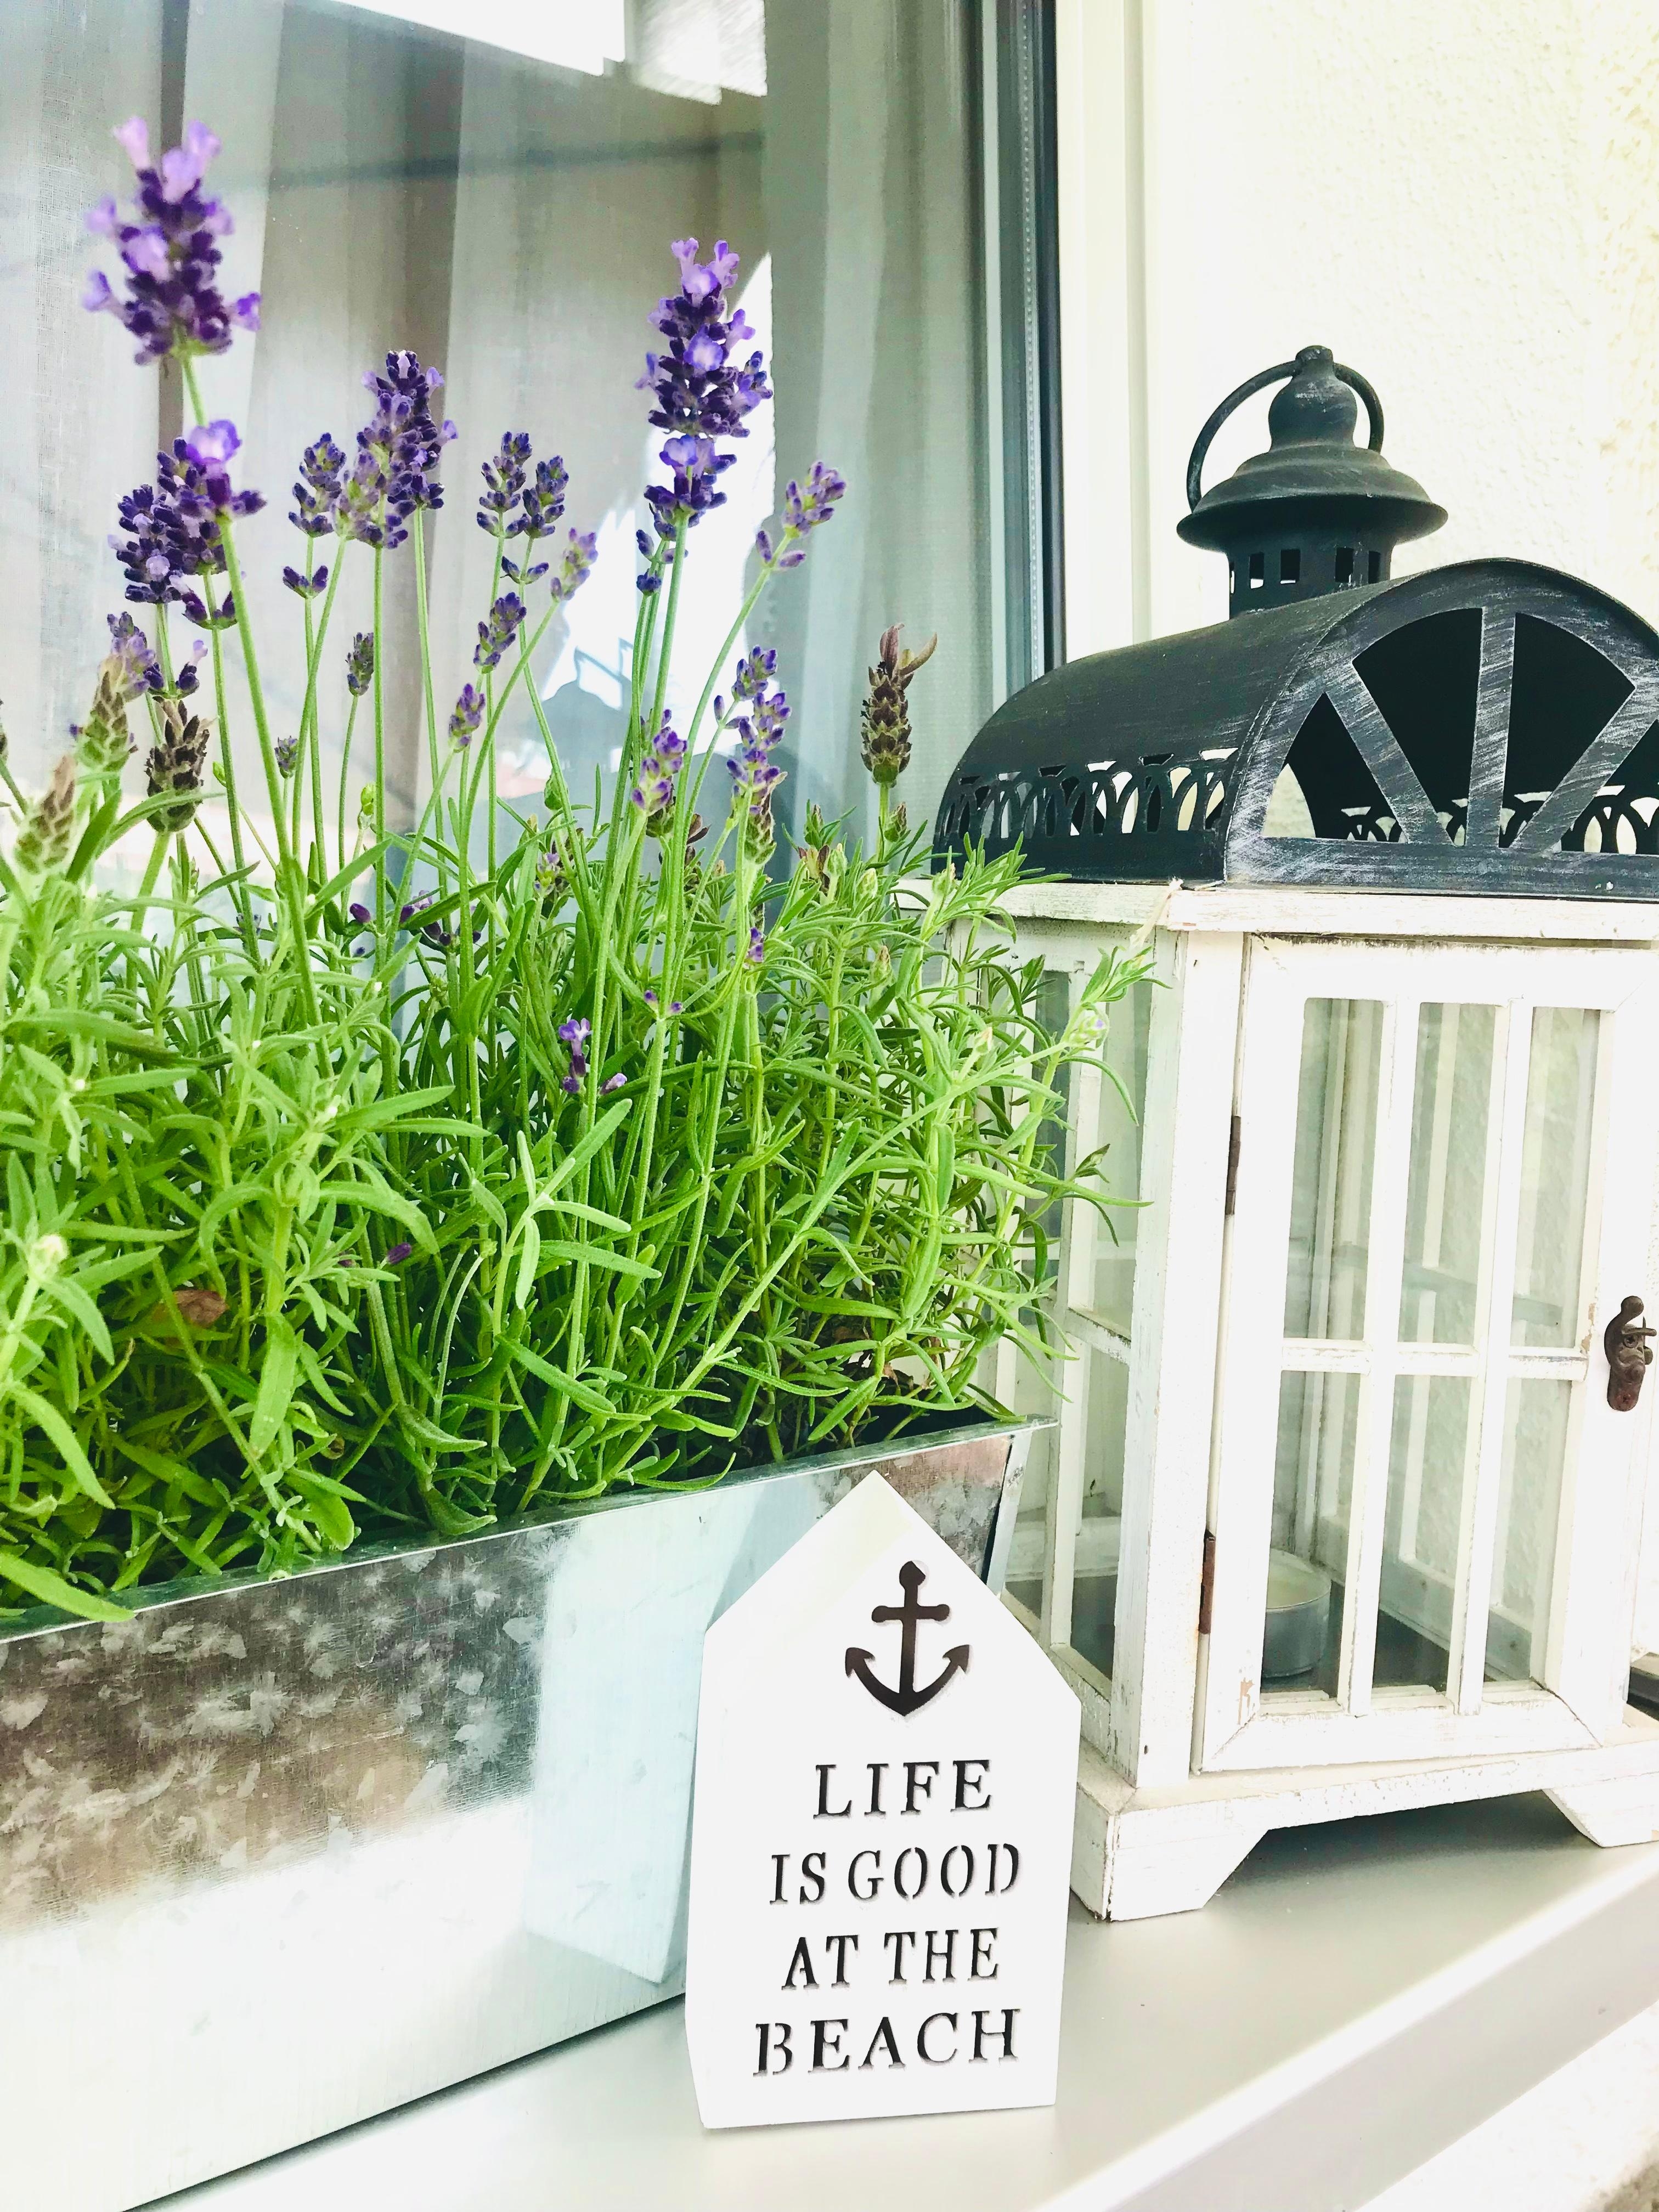 #balkony #home #summer #lavendel 
🤍💜